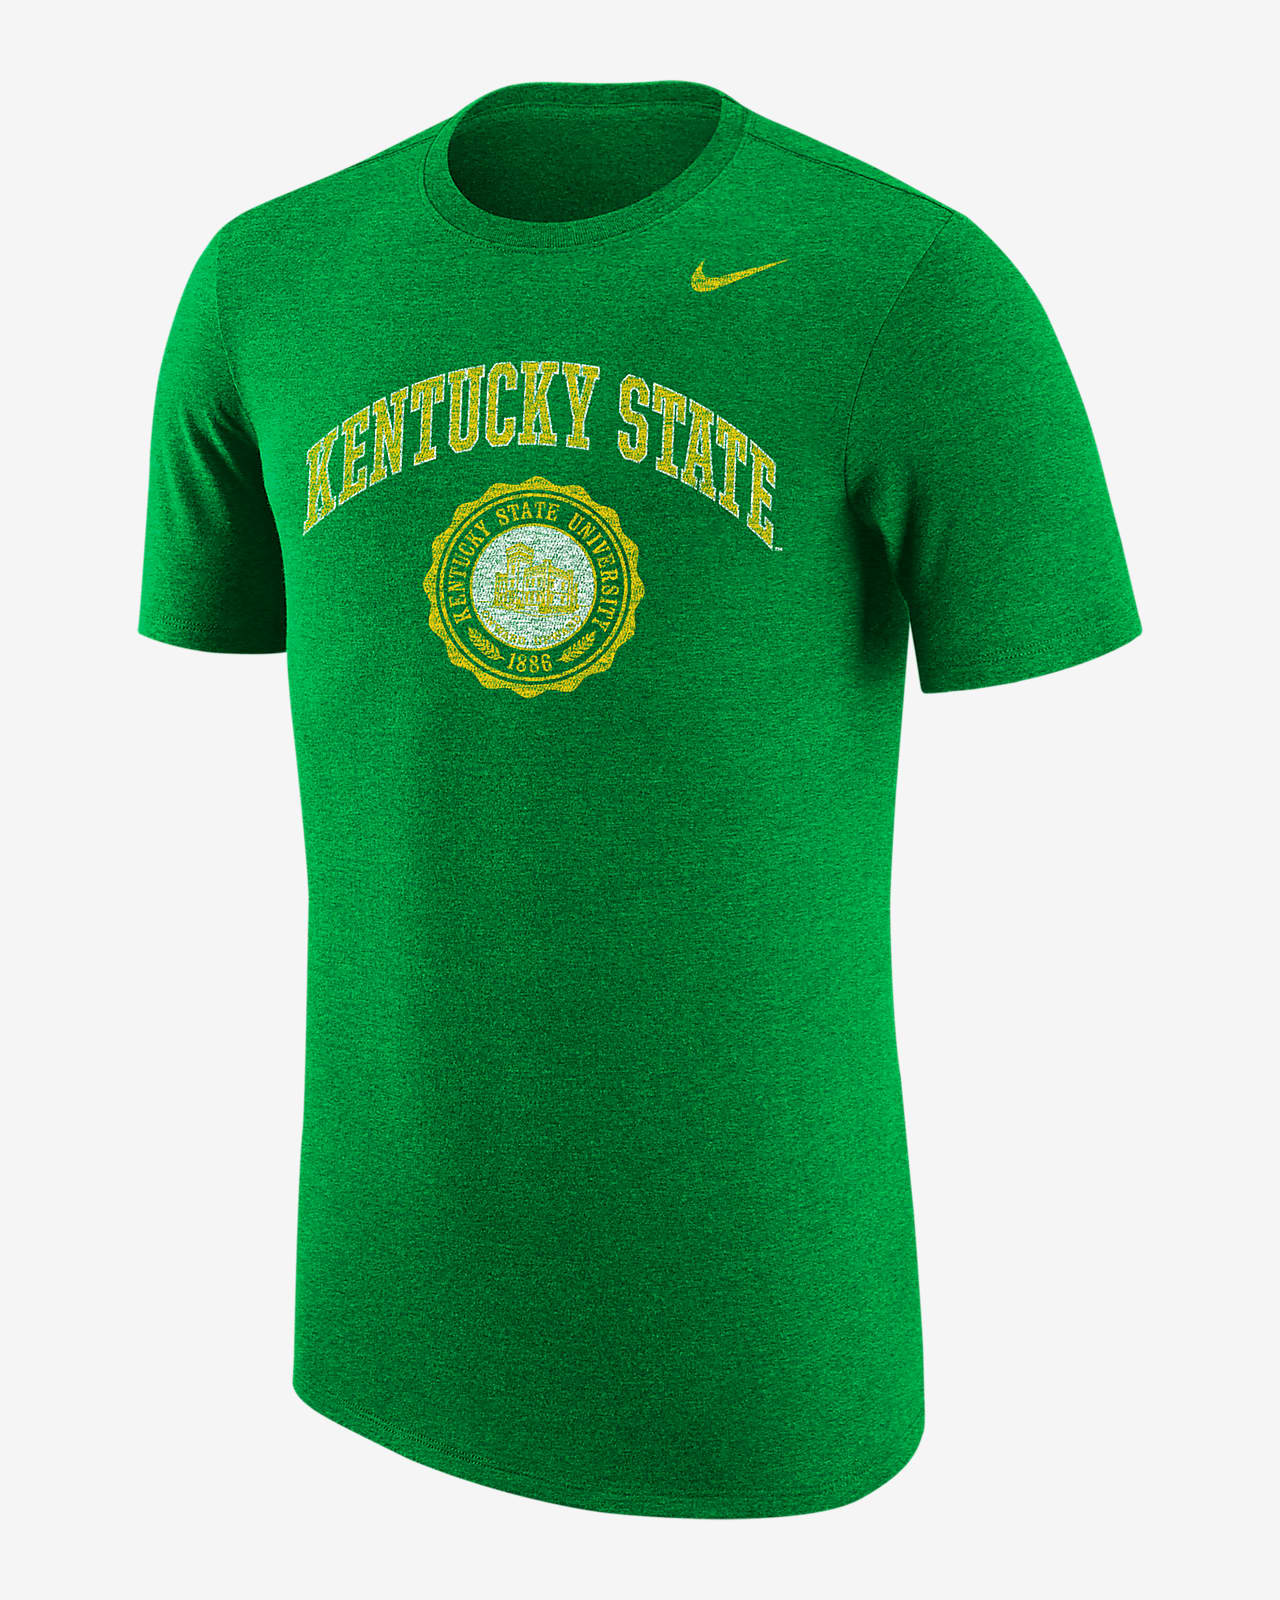 Nike College (Kentucky State) Men's T-Shirt